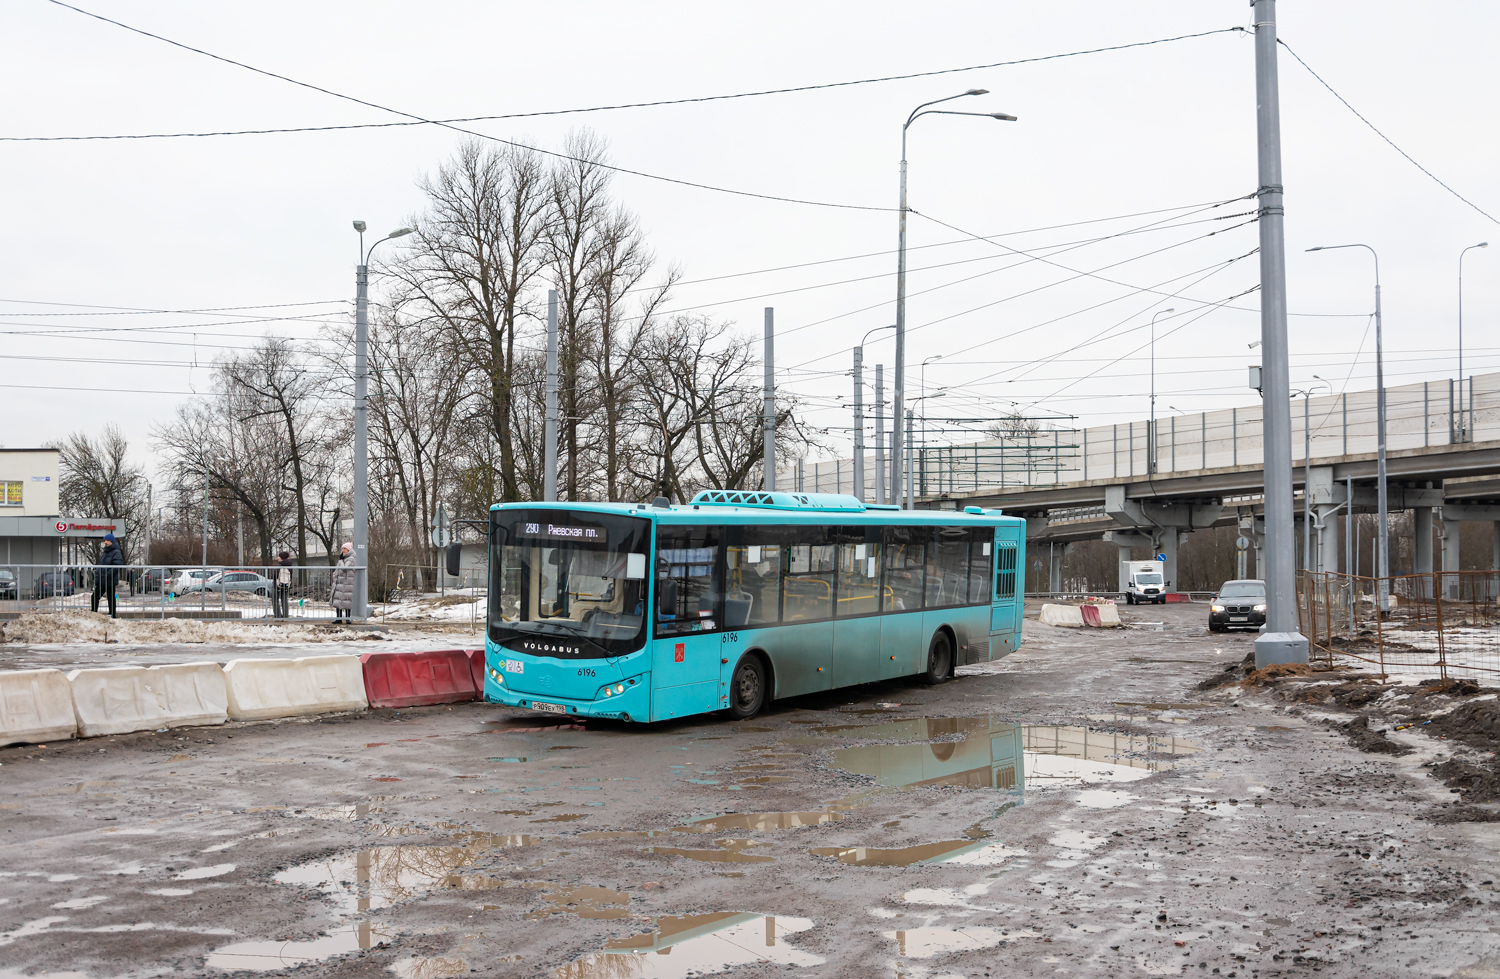 Petersburg, Volgabus-5270.G2 (LNG) # 6196